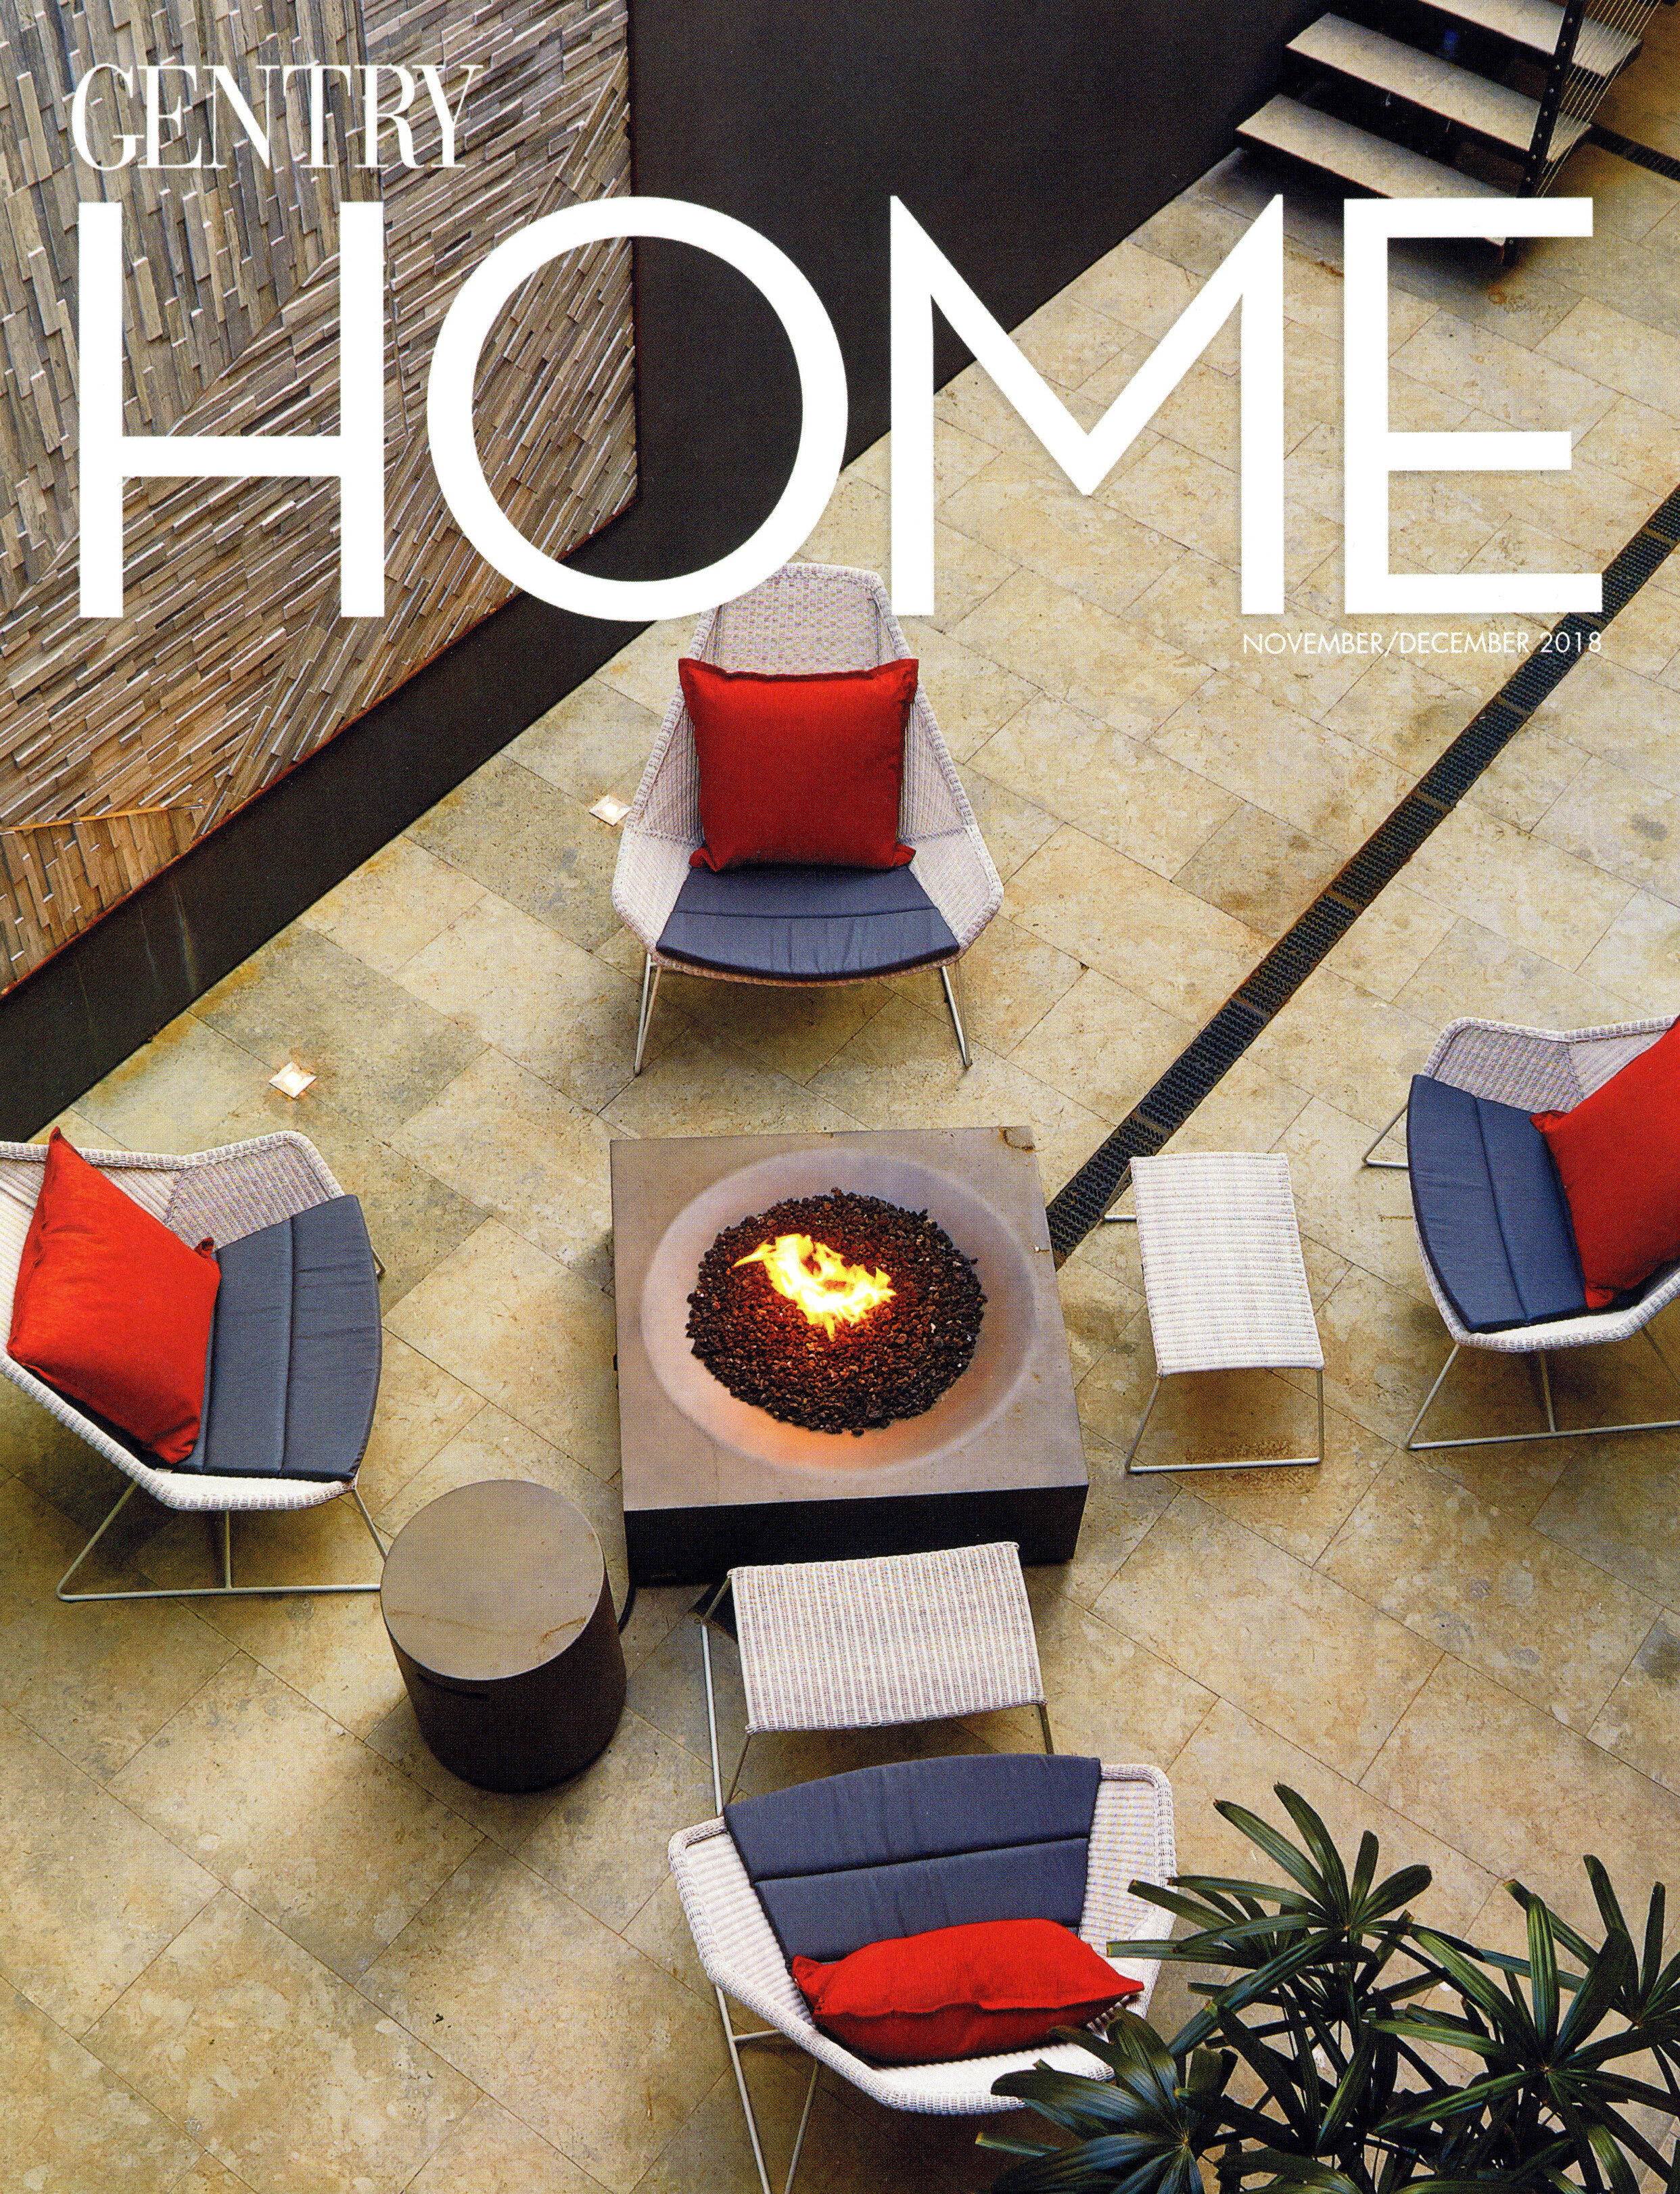 Gentry Home Magazine